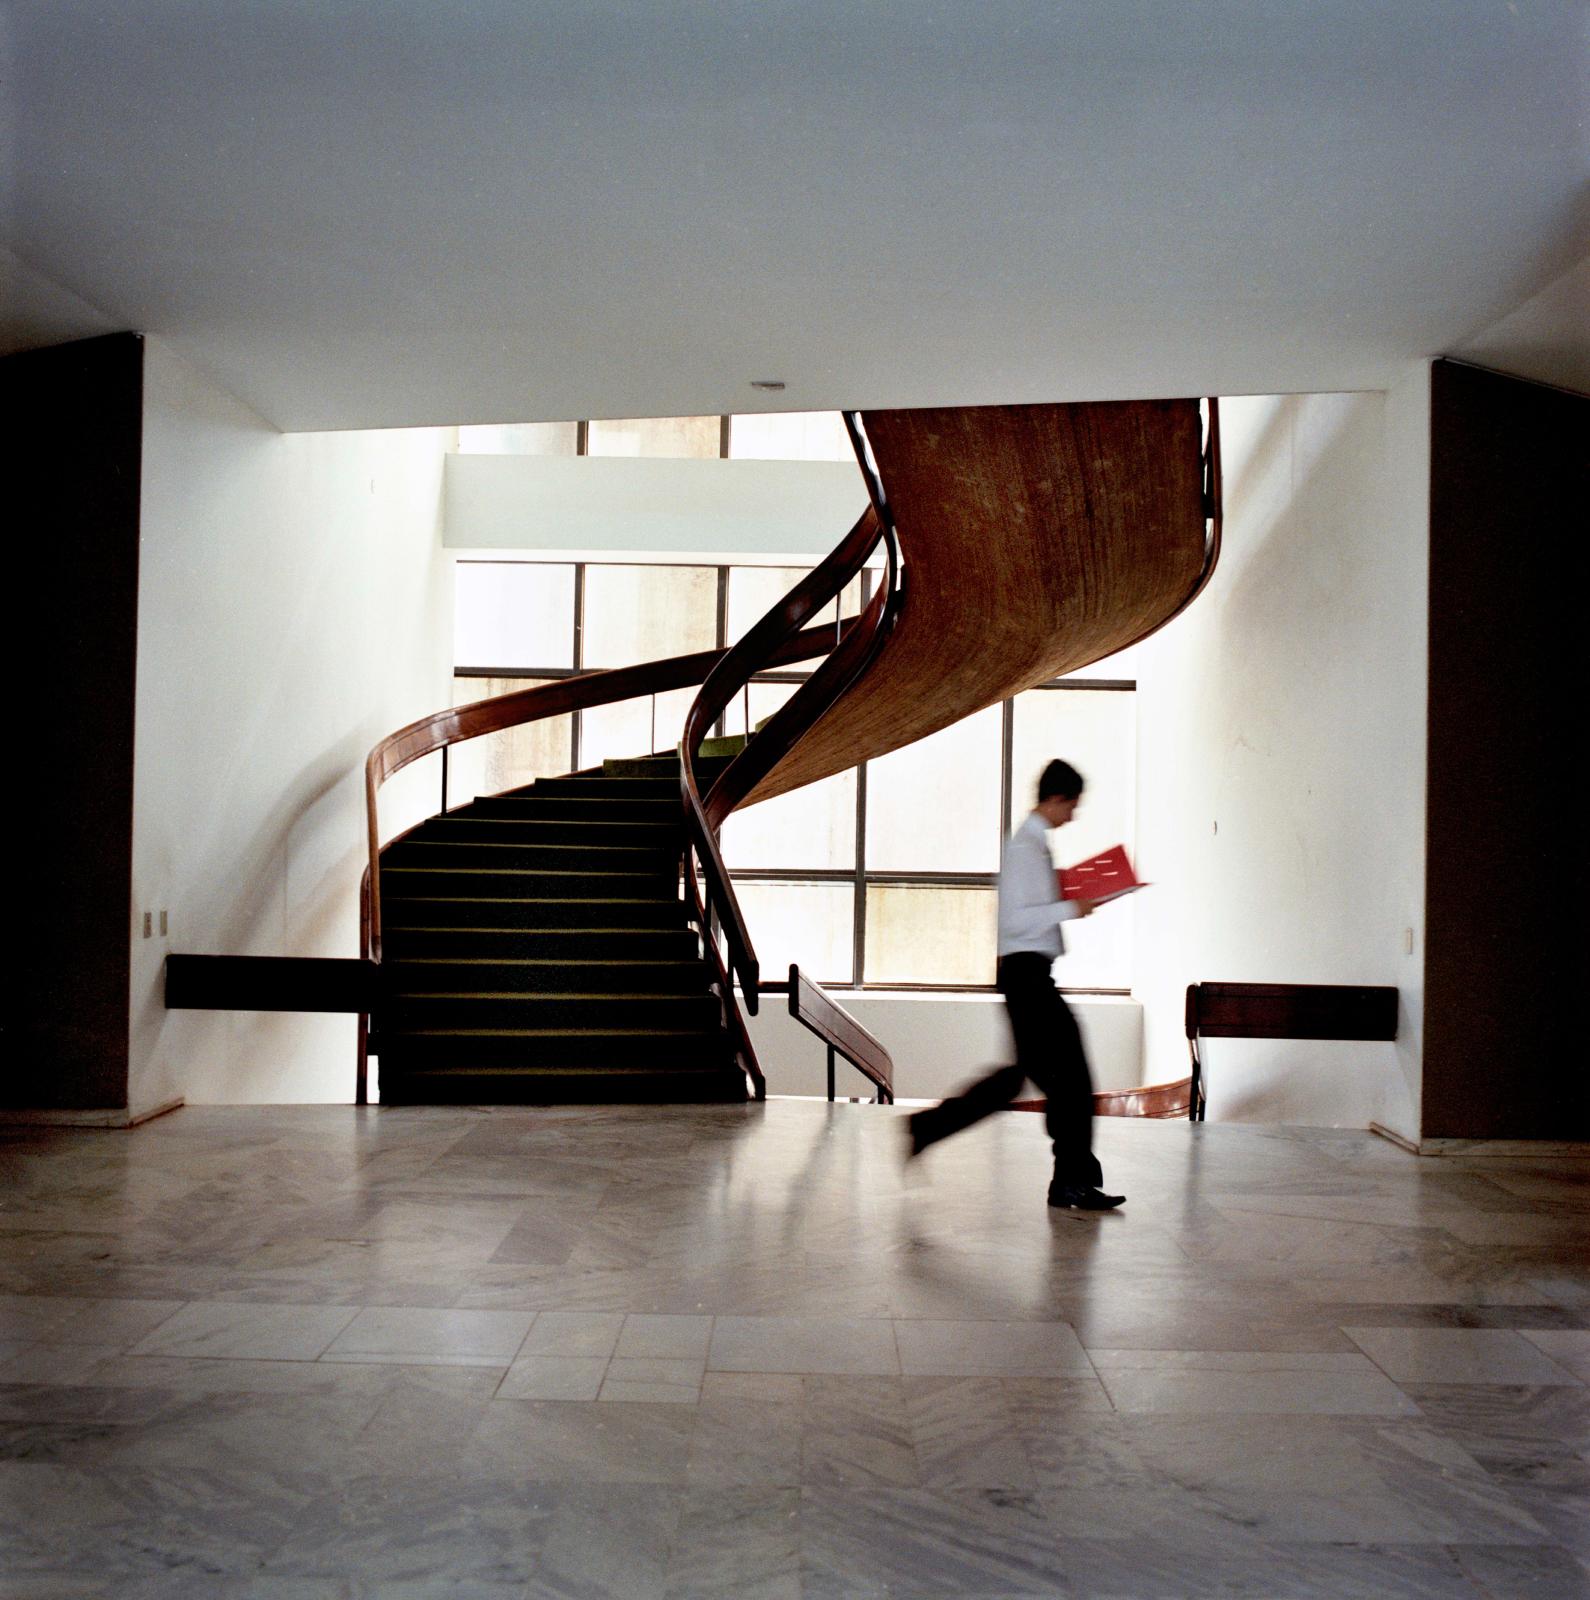 Staff roam the corridors of Itamaraty Palace. Designed by Brazilian architect Oscar Niemeyer and located in Brasilia, Brazil's capital, the...